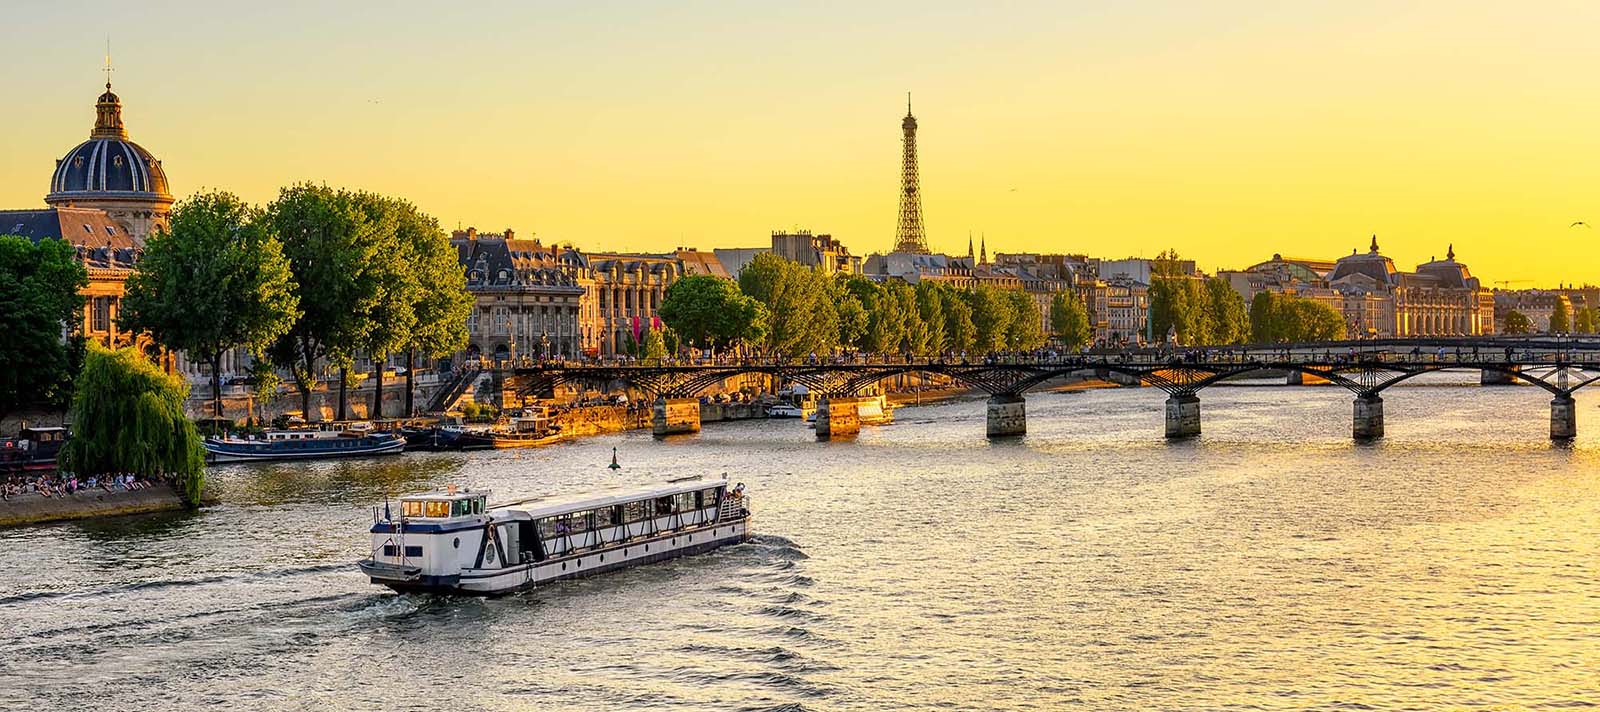 paris sunset river cruise tickets - Paris Tickets